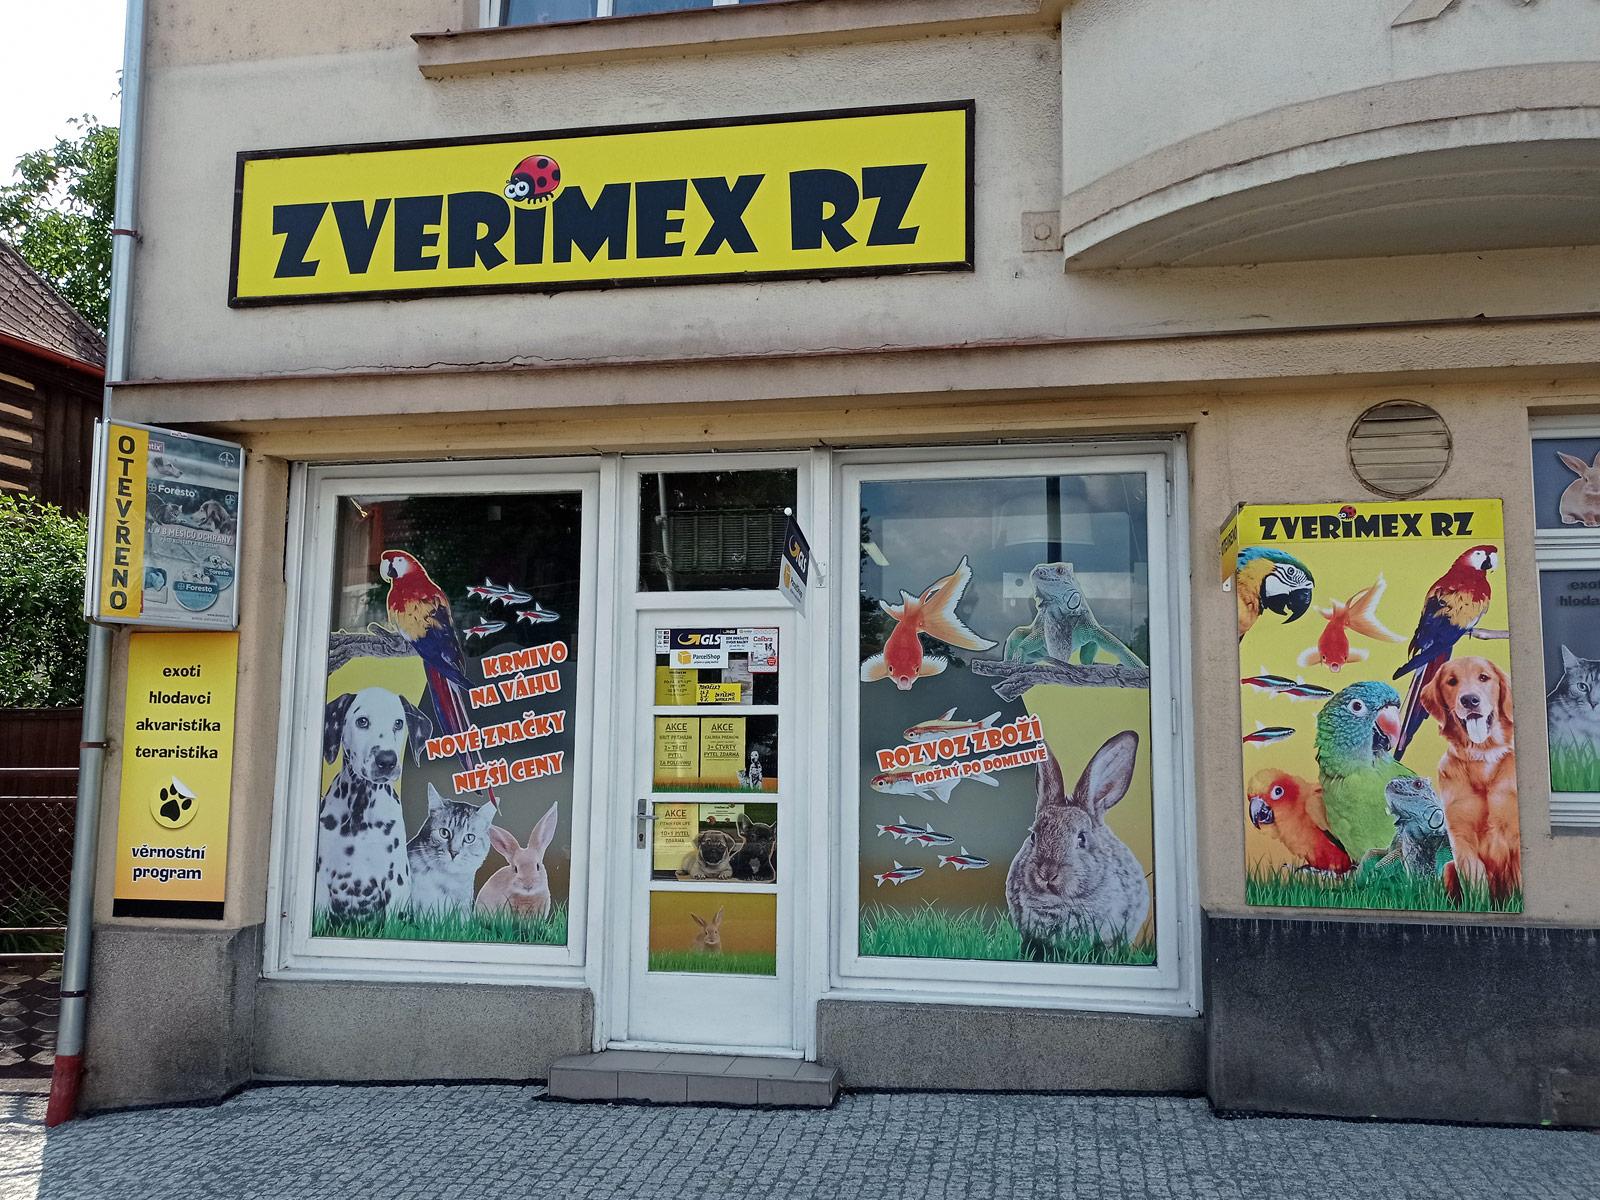 Zverimex RZ